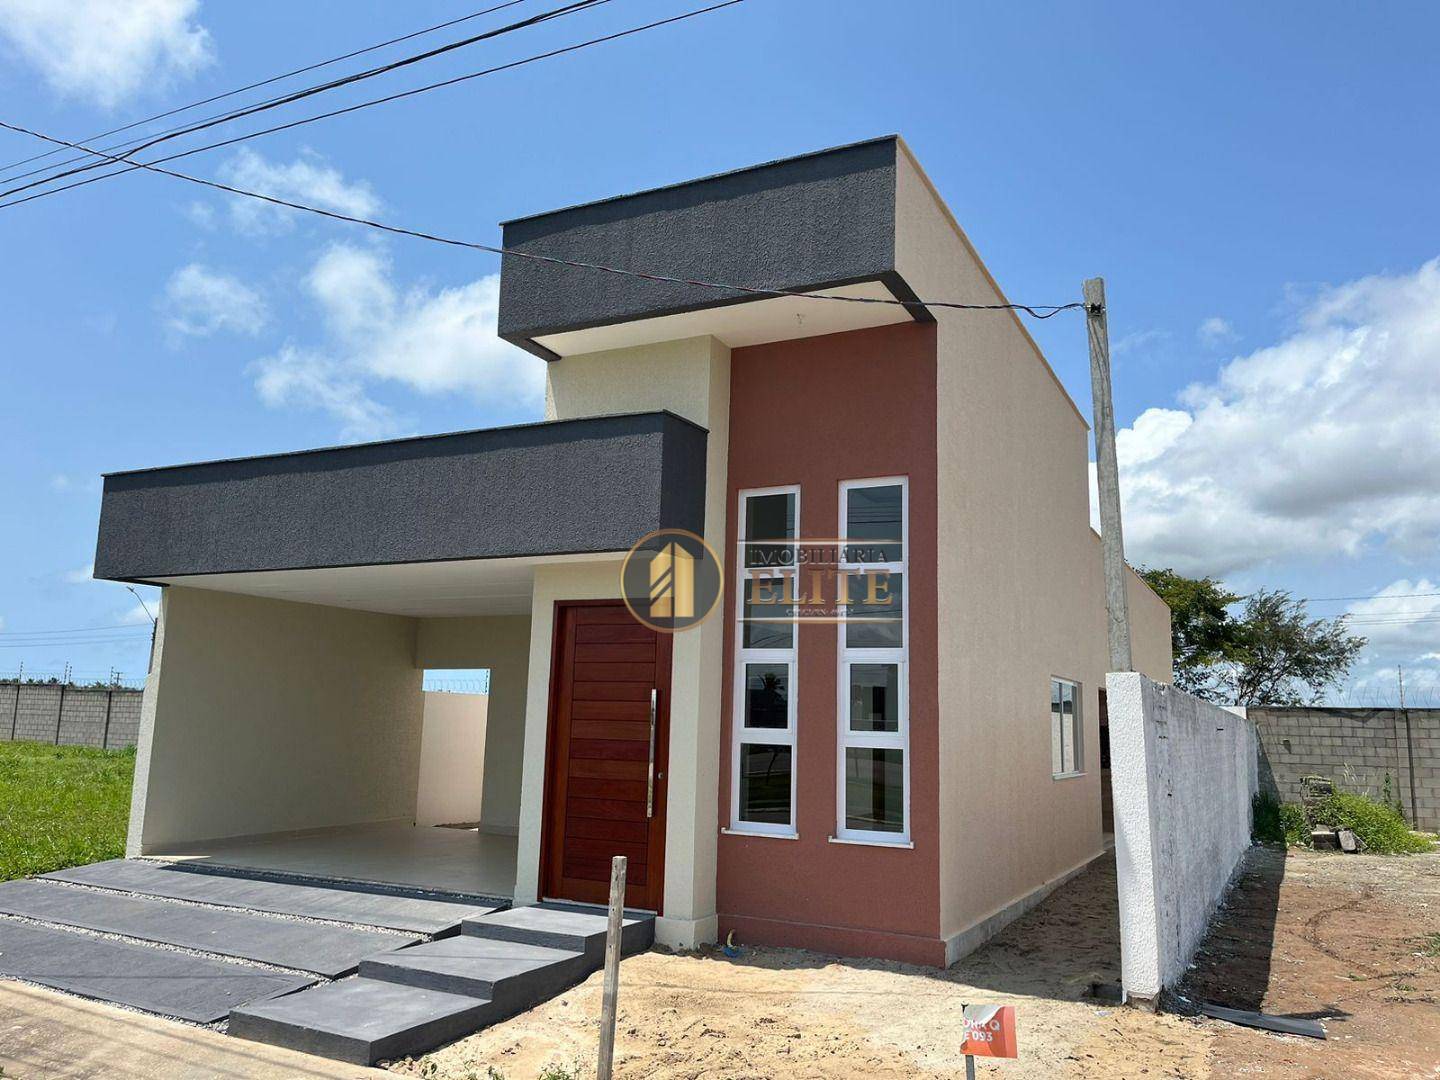 Casa em Condominio com 3 dormitórios à venda, 131 m² - Cajupiranga - Parnamirim/RN